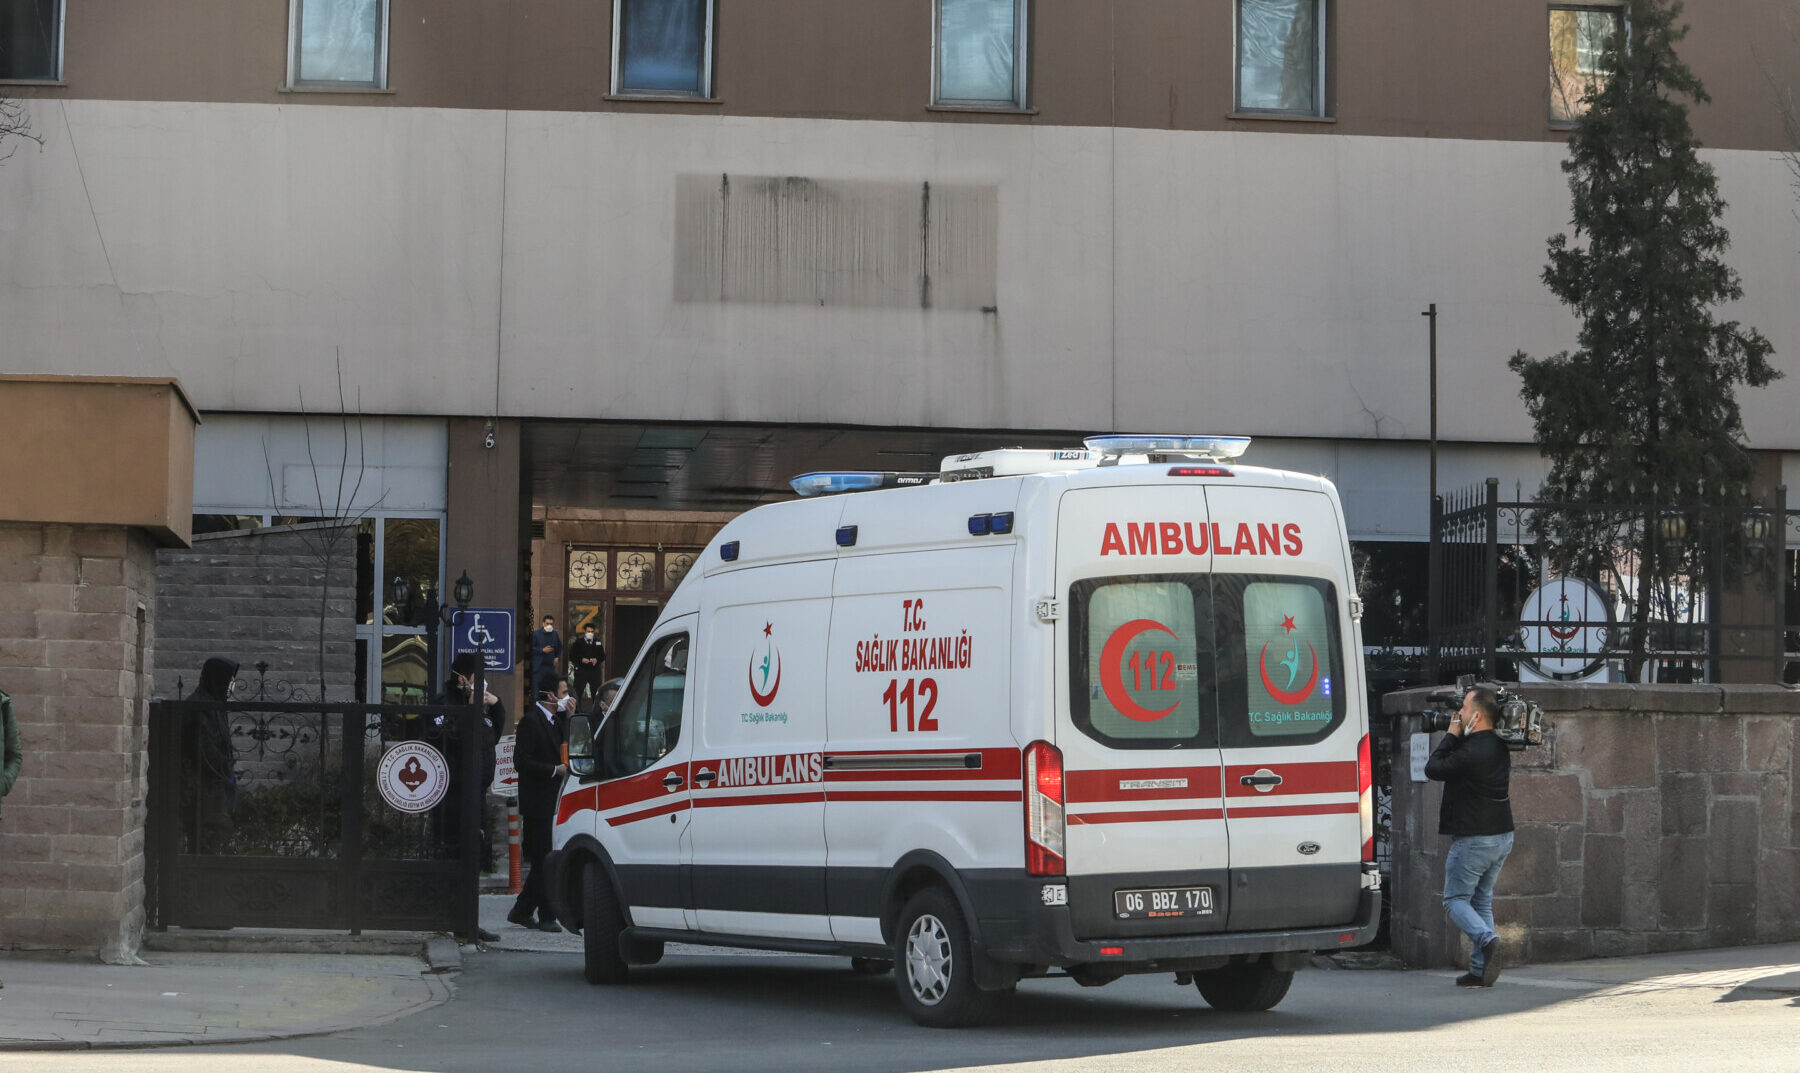 7 Killed in Bus Crash in Eastern Turkey: President